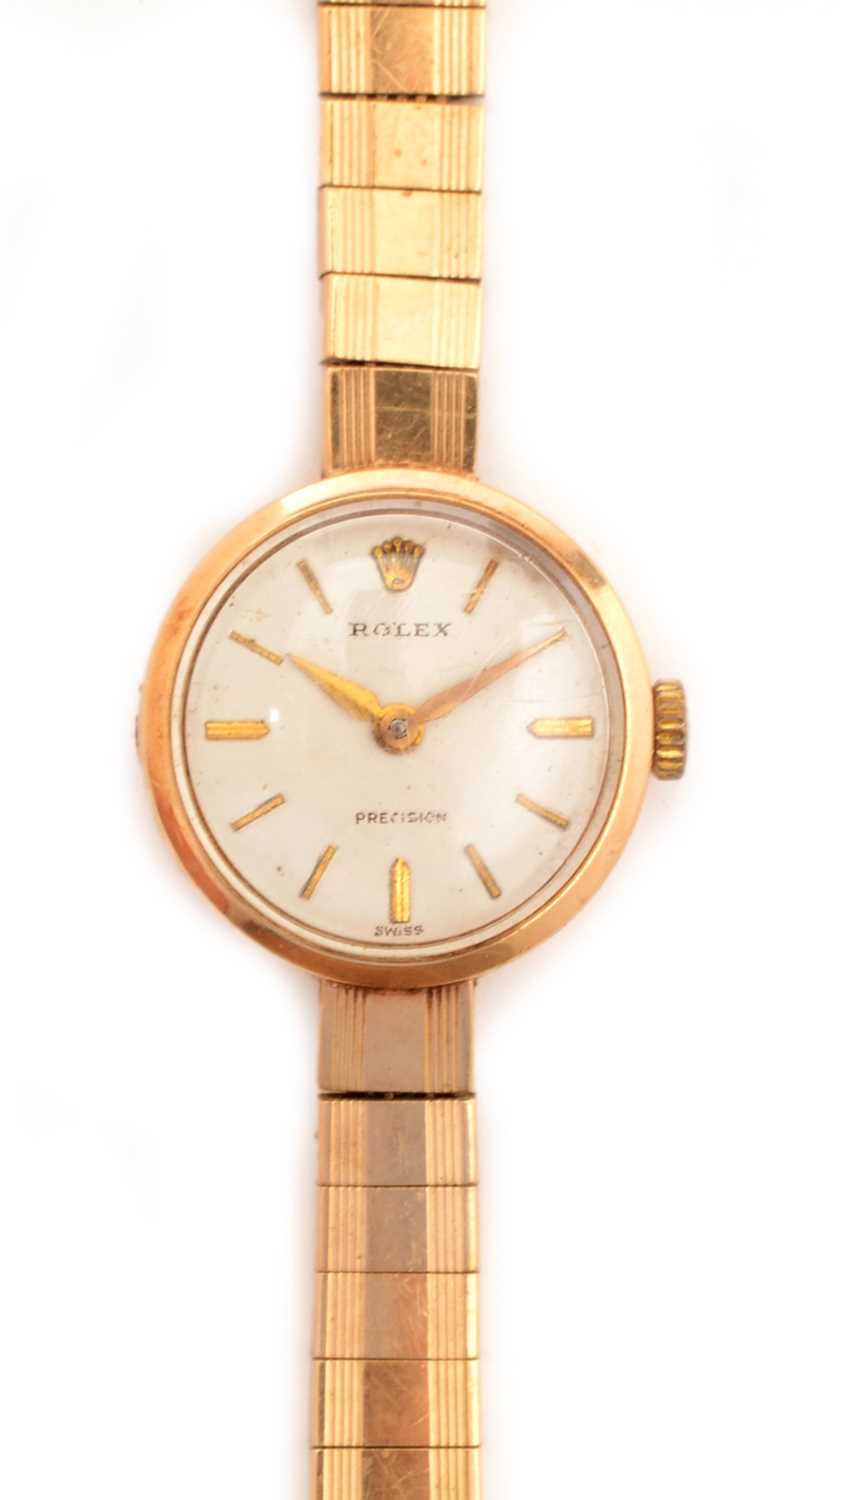 Lot 1 - A Rolex Precision lady's cocktail watch